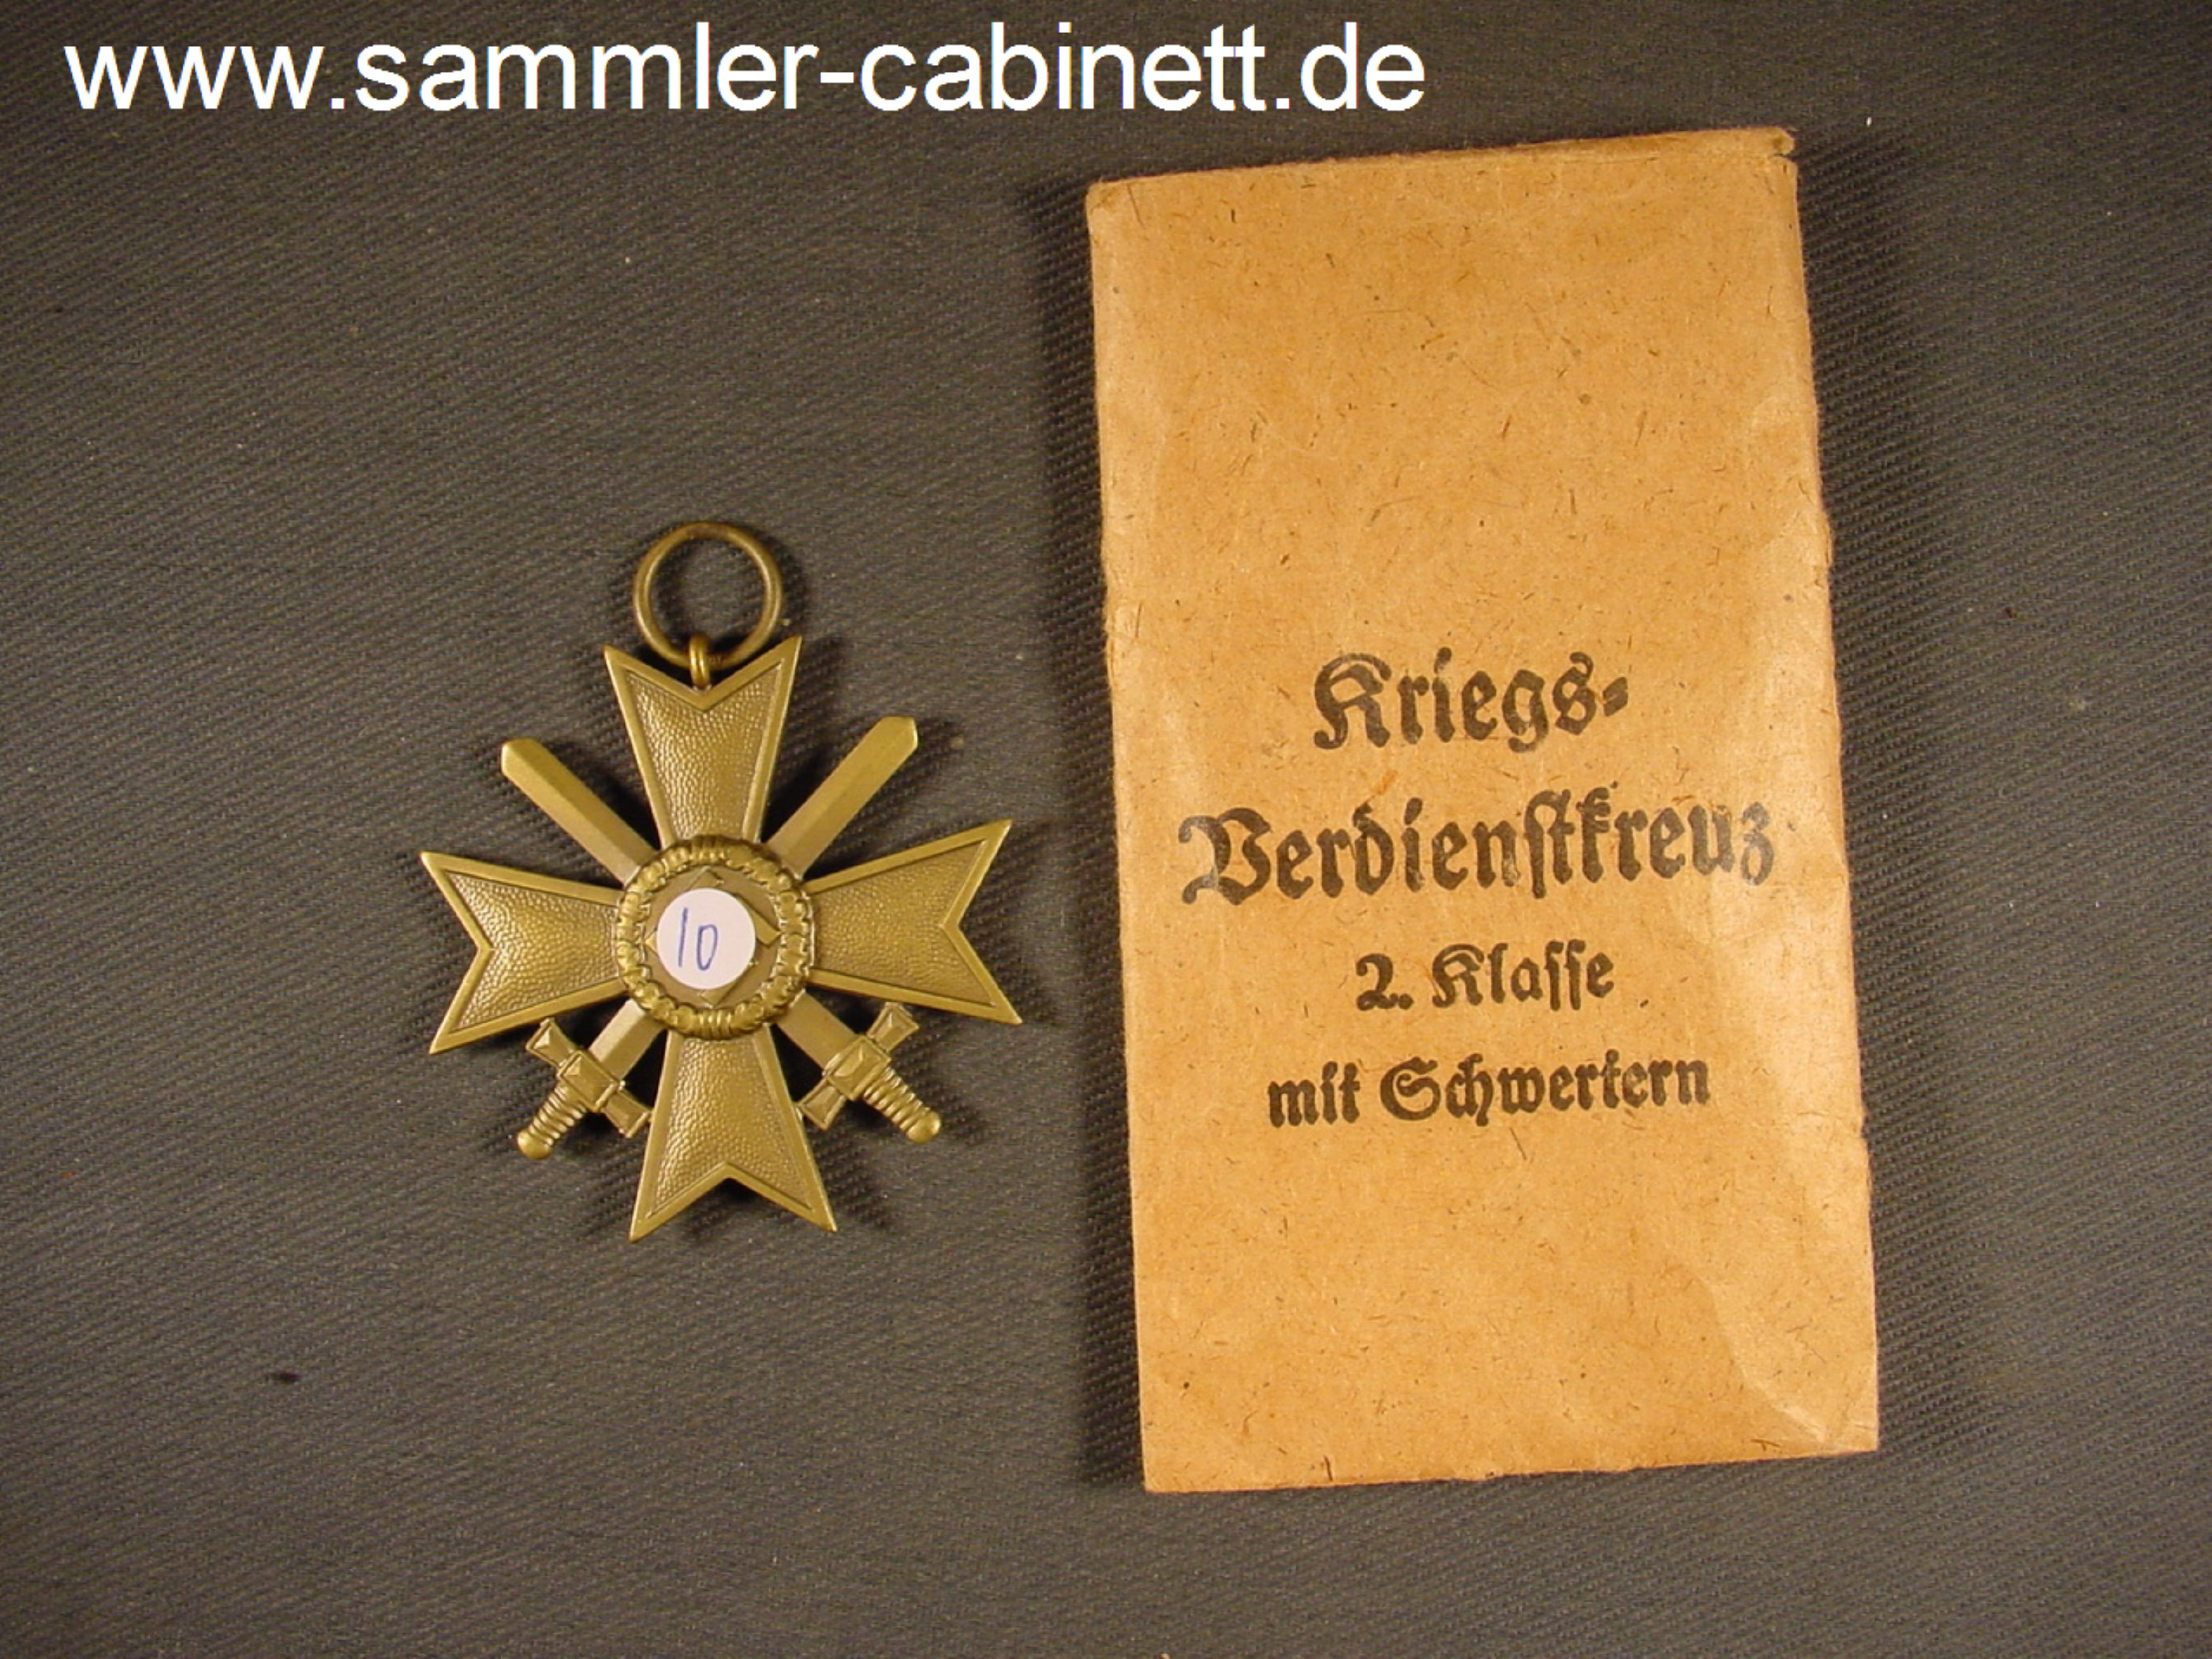 Kriegsverdienstkreuz 2.Klasse mit Schwertern - Buntmetall...